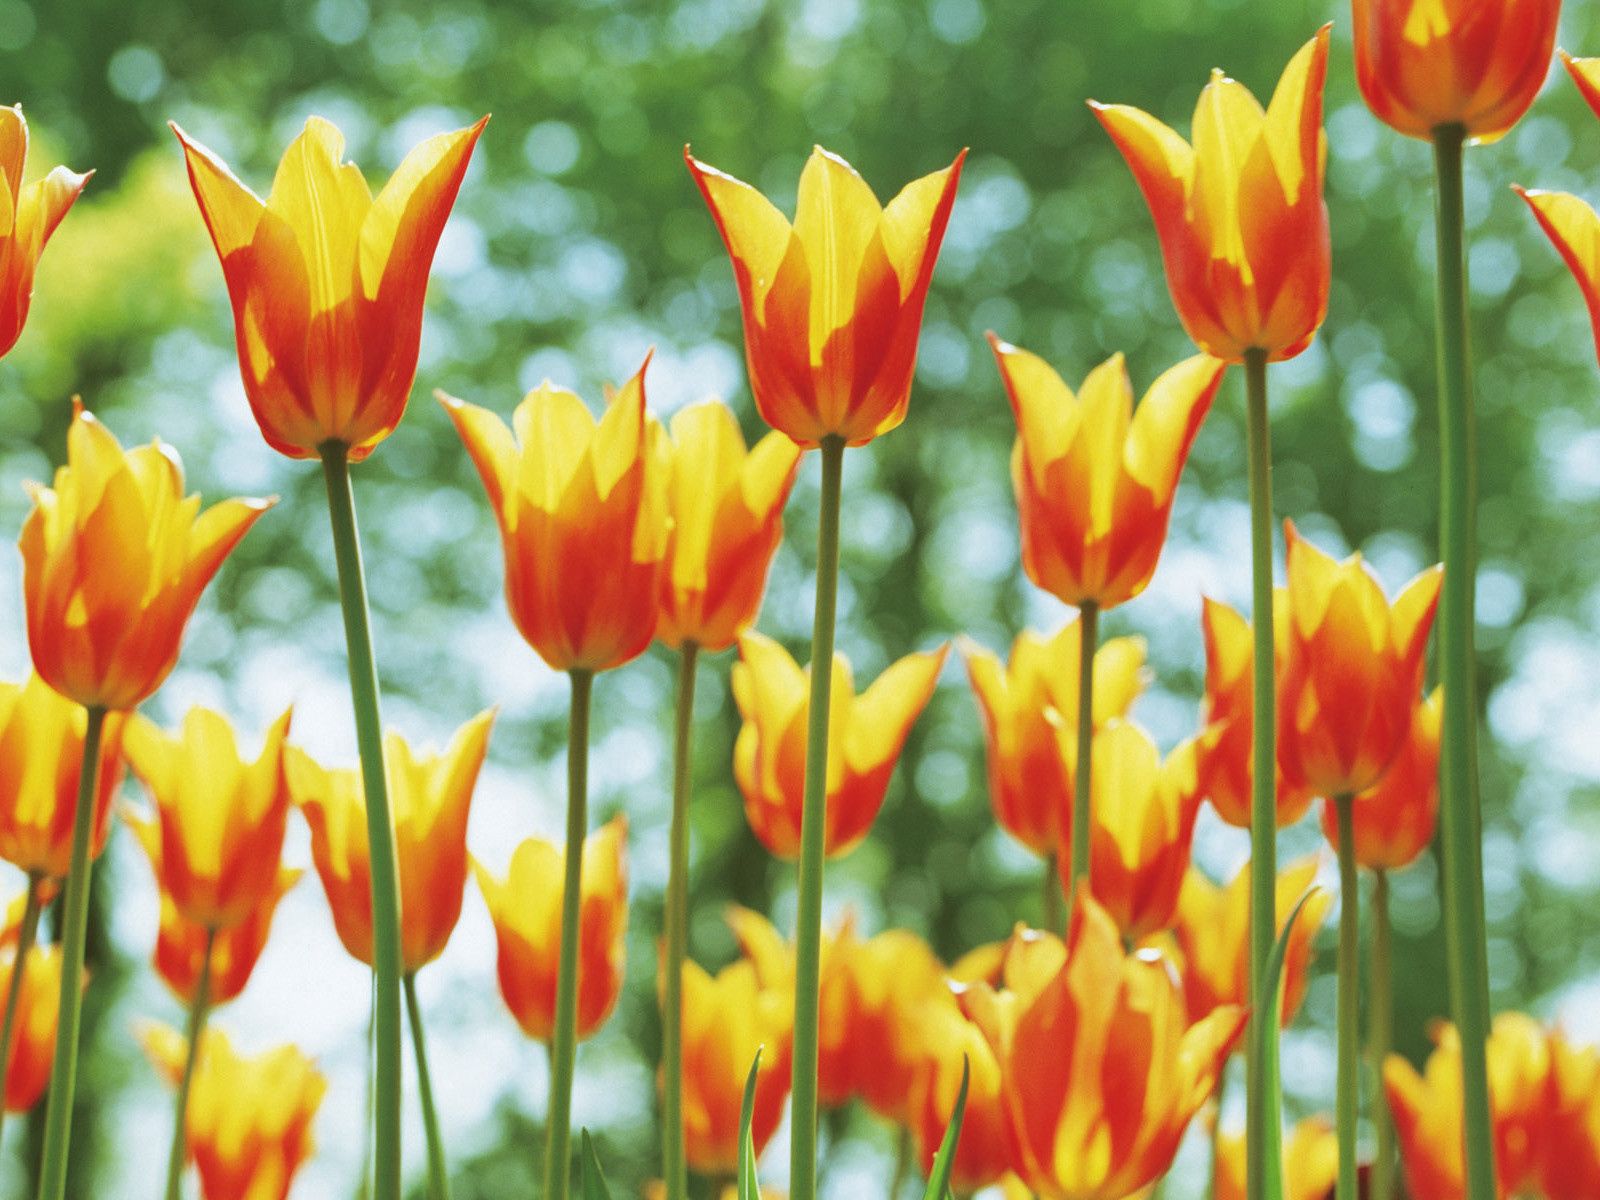 Handy-Wallpaper Sonnigen, Blendung, Blumen, Blumenbeet, Sonnig, Tulpen, Frühling kostenlos herunterladen.